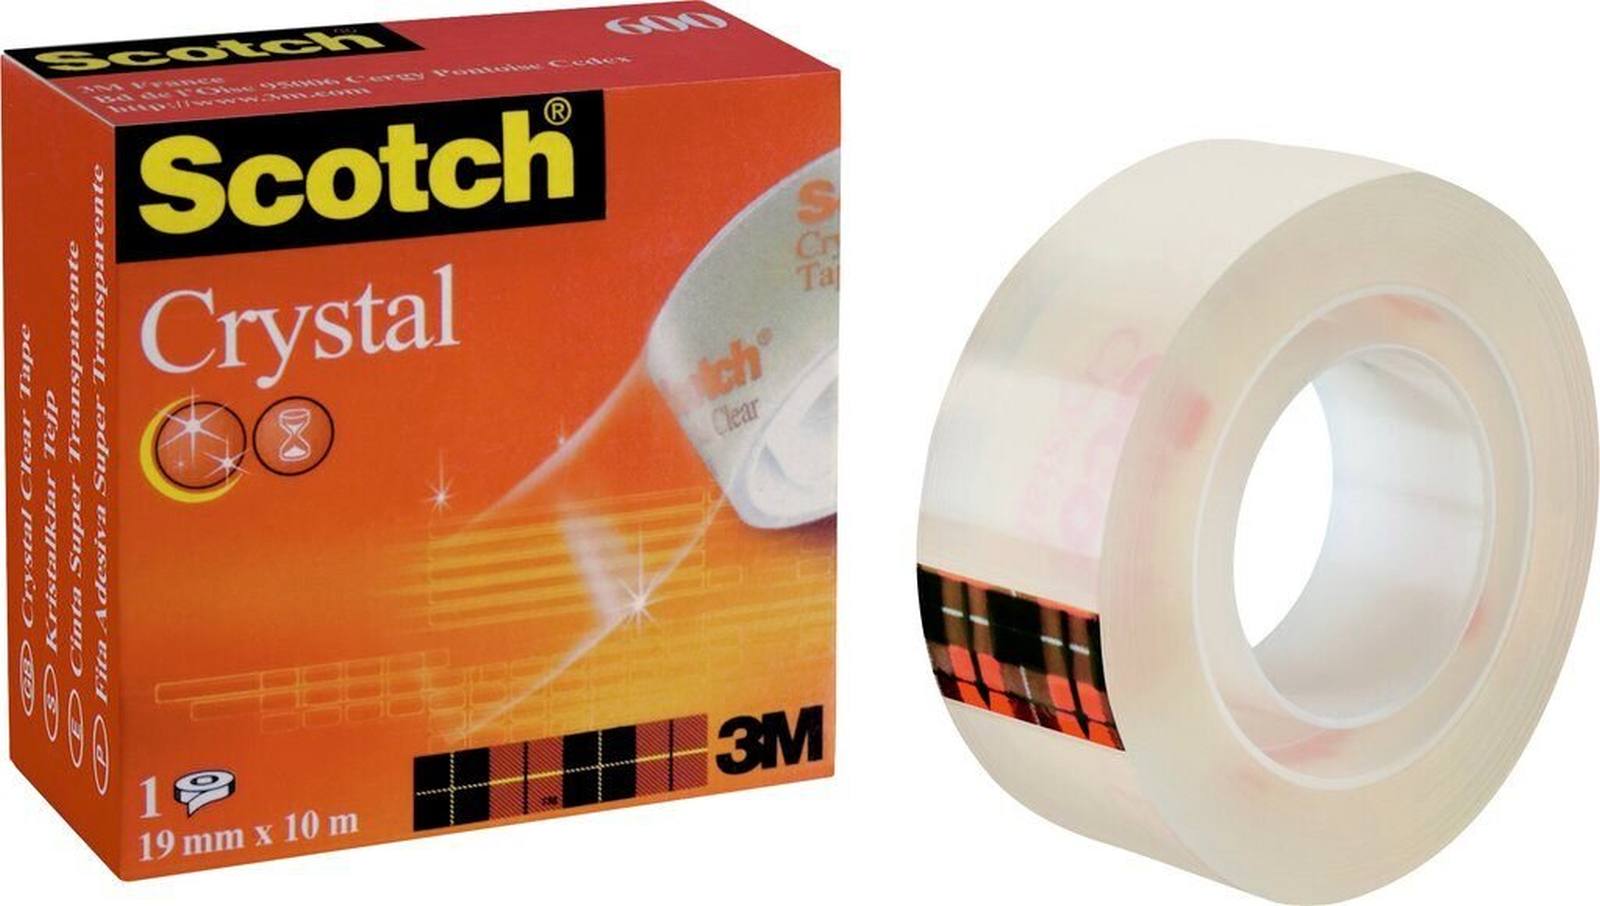 3M Scotch Crystal adhesive tape 1 roll 19 mm x 10 m